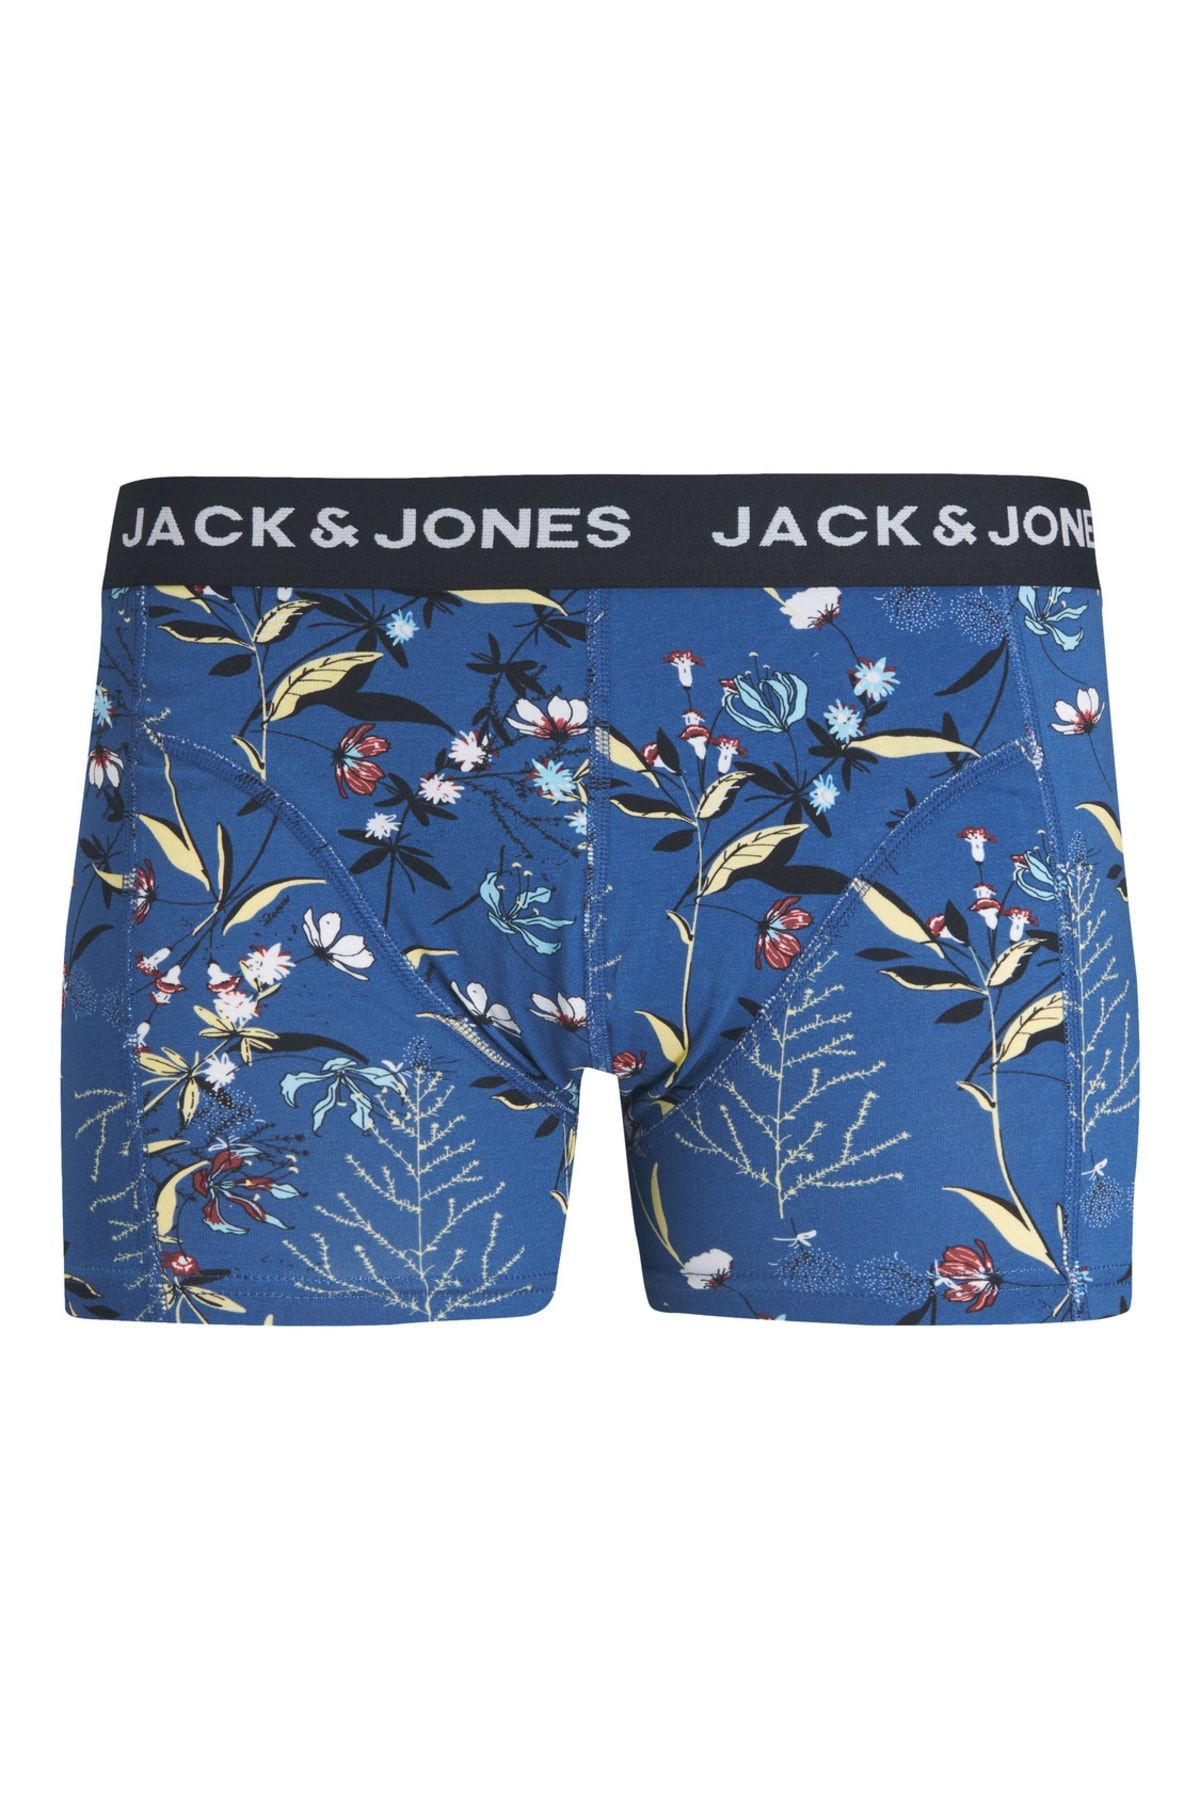 Jack & Jones Desenli Tekli Boxer- Small